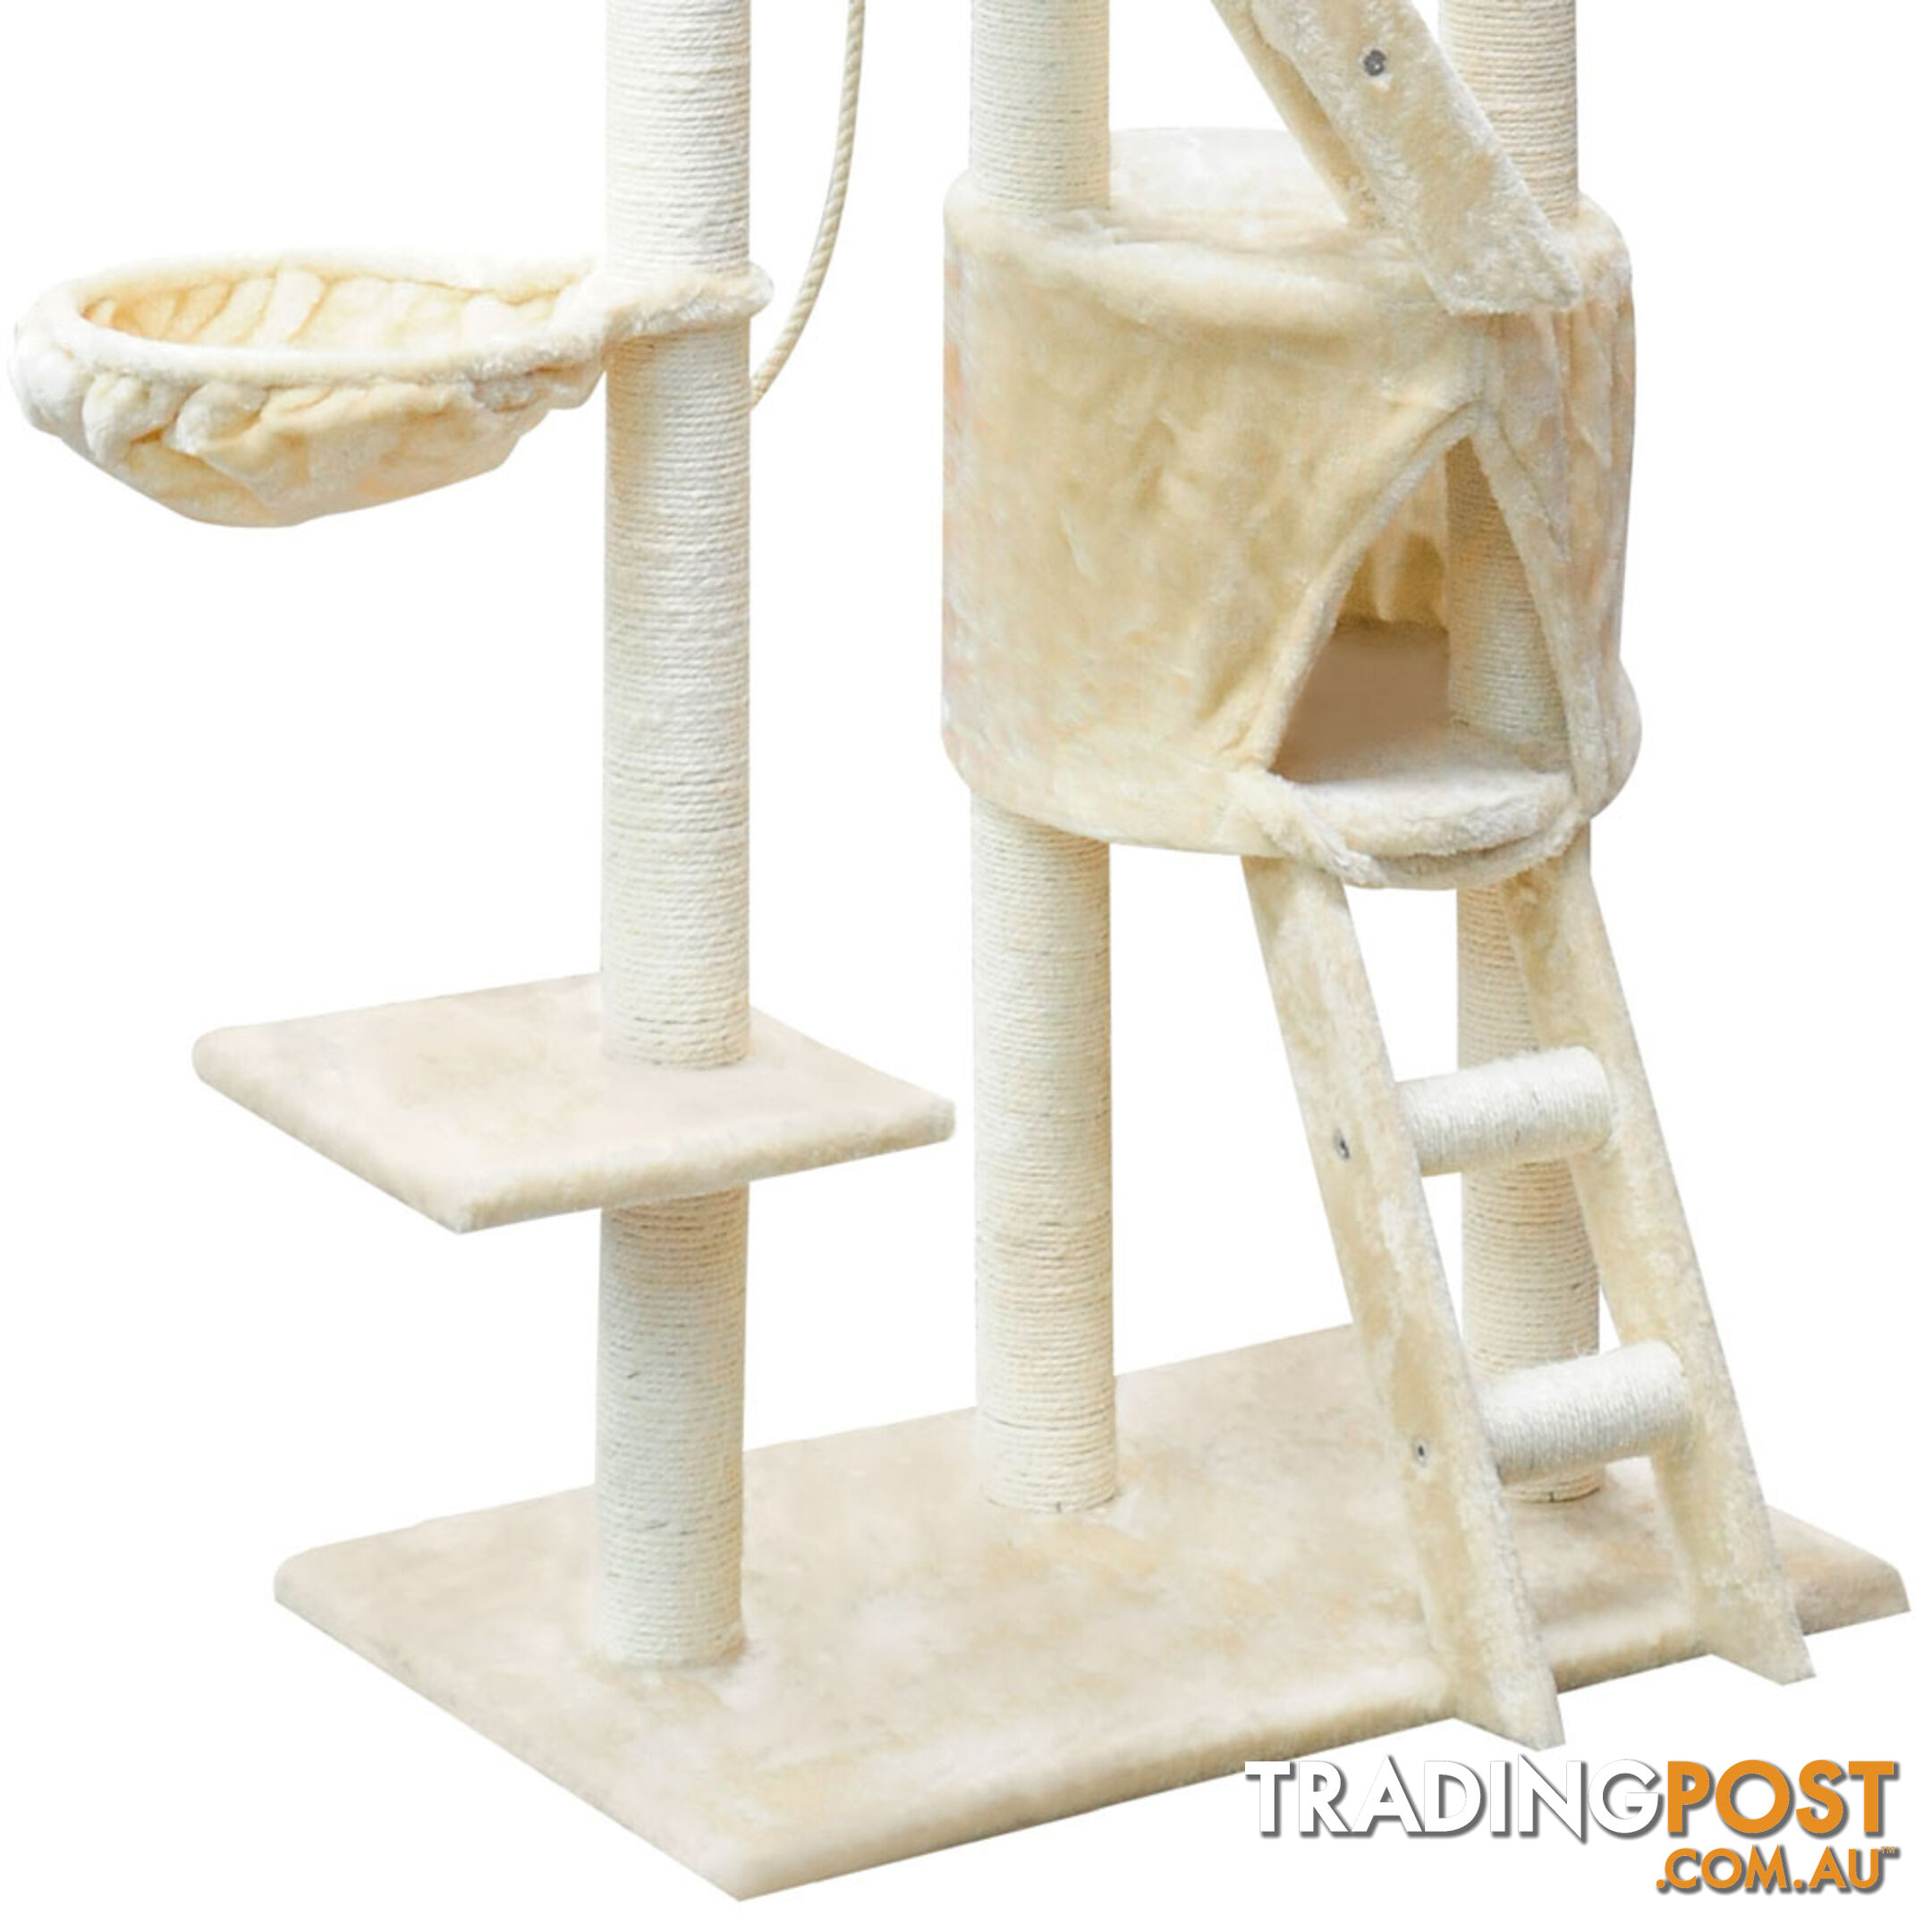 Multi Level Cat Scratching Poles Tree w/ Ladder Beige